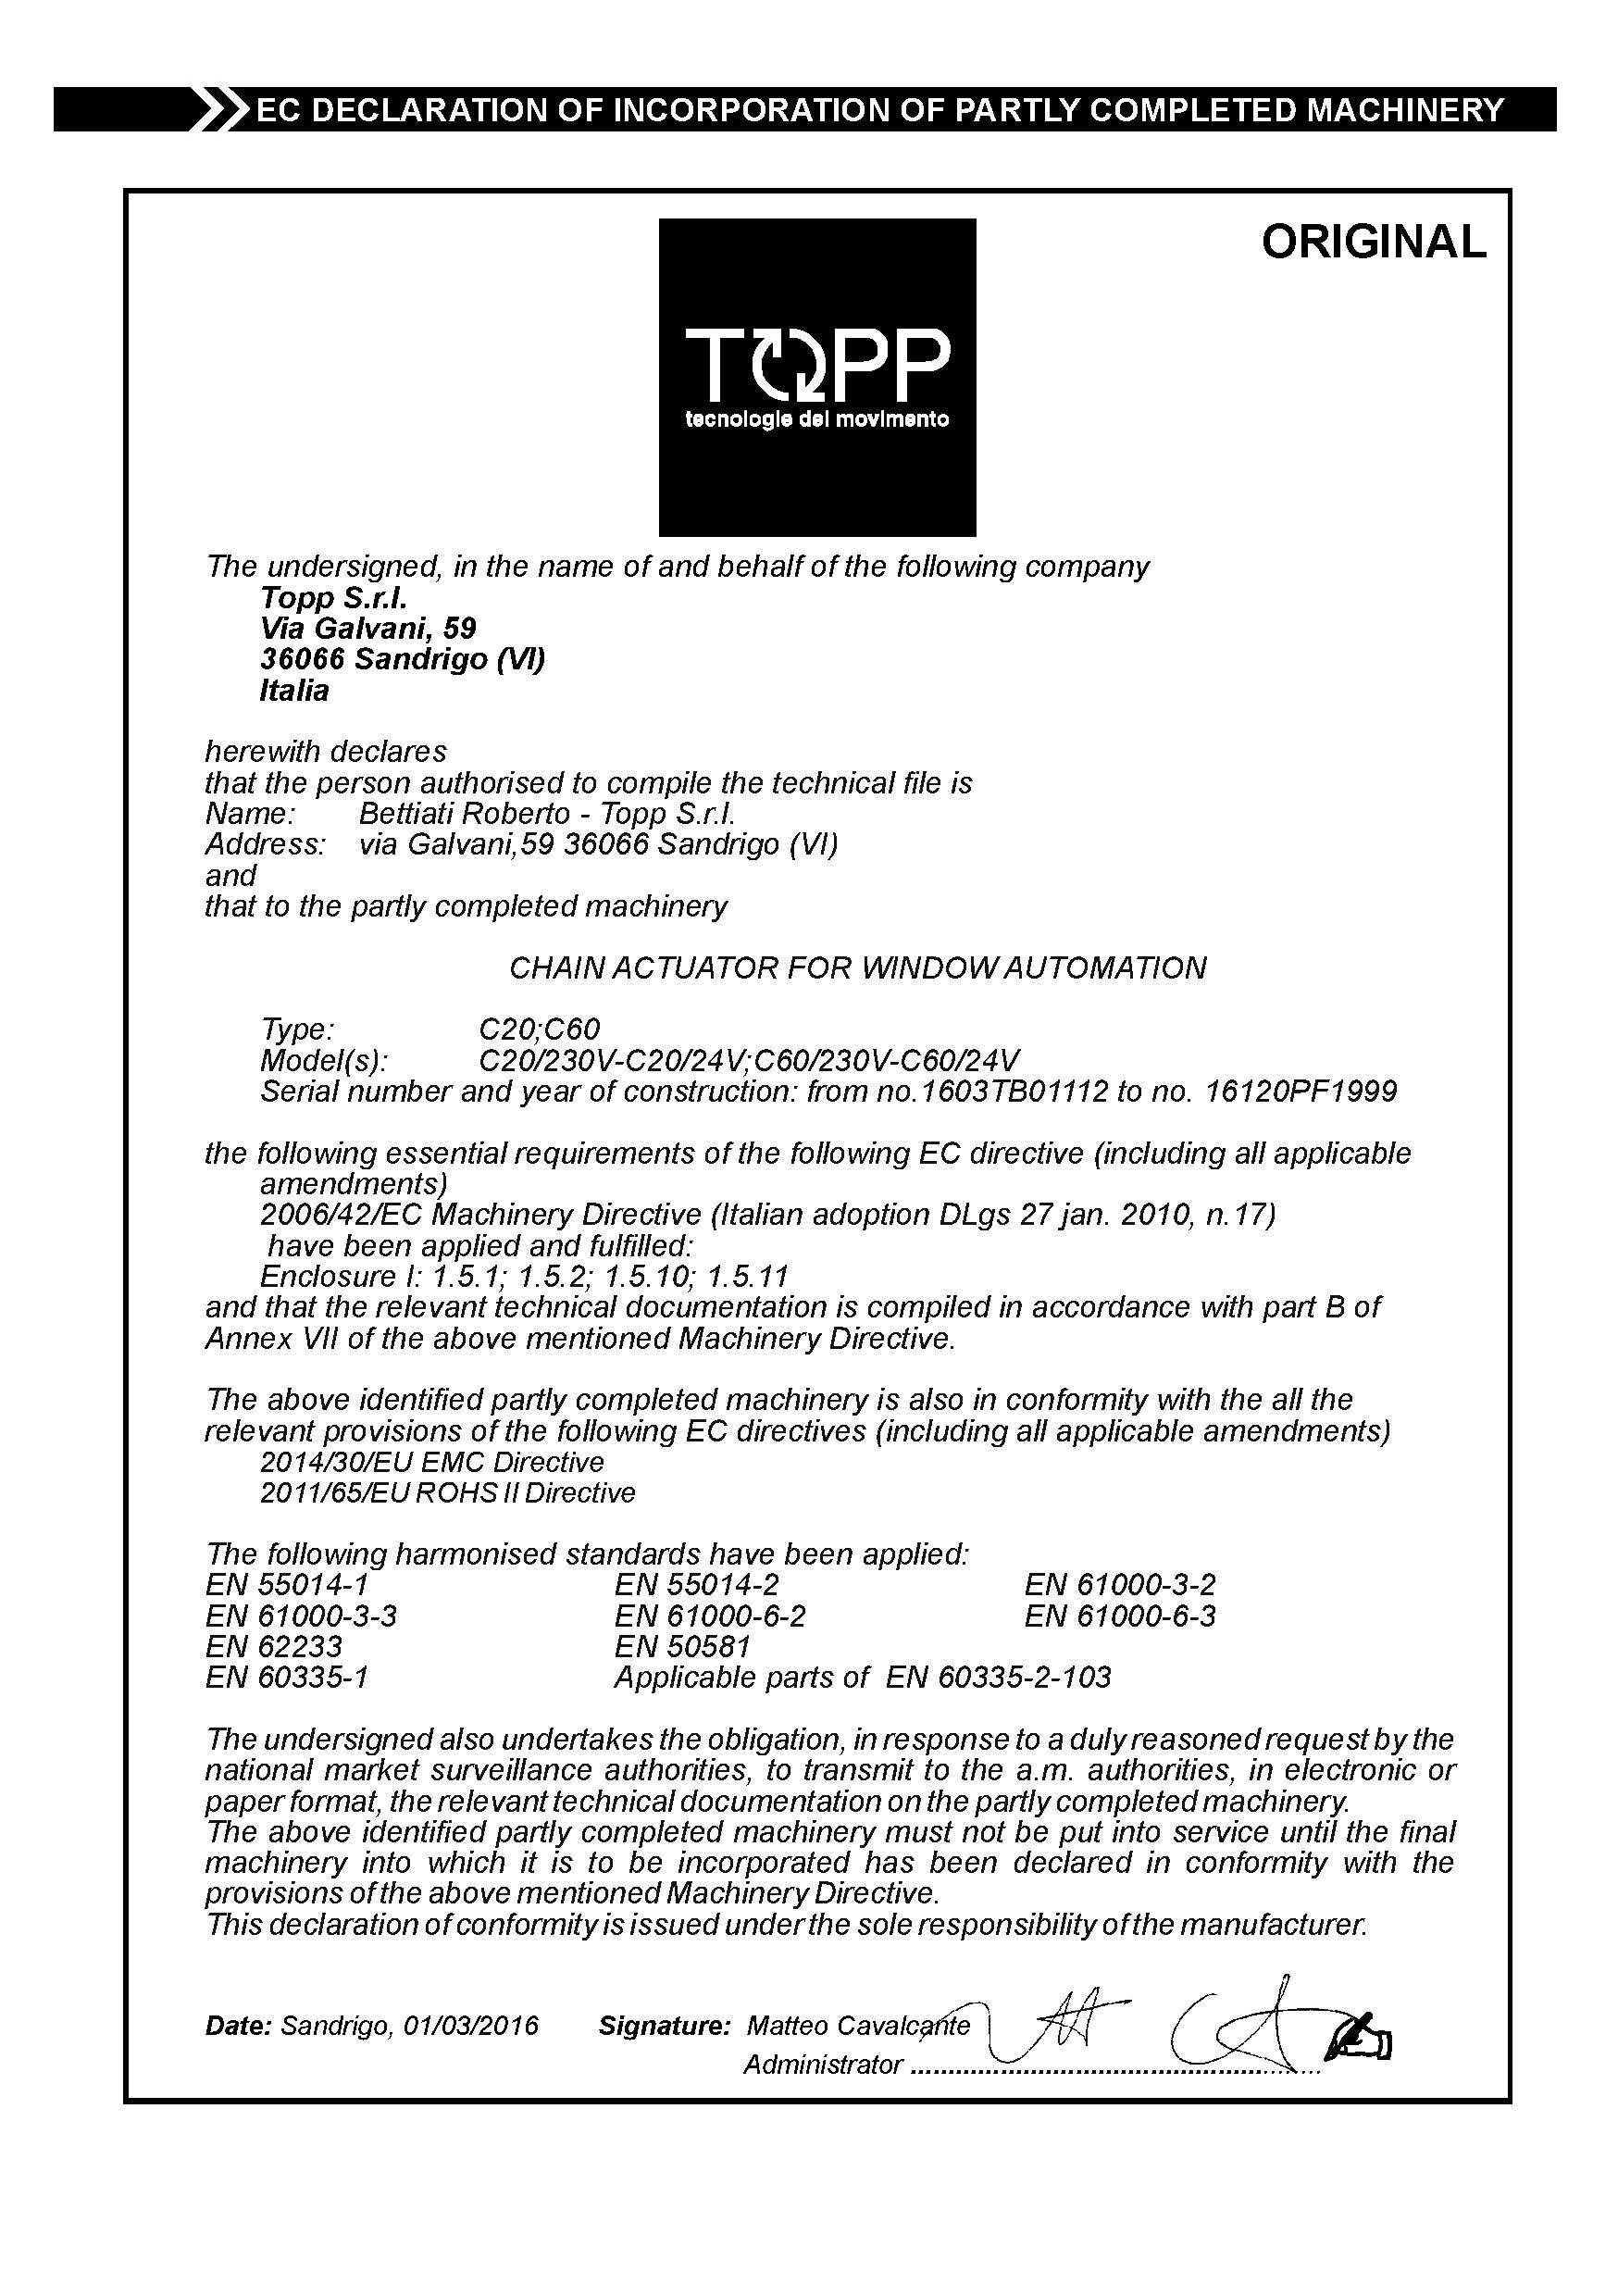 TOPP chain actuator C20 certifications